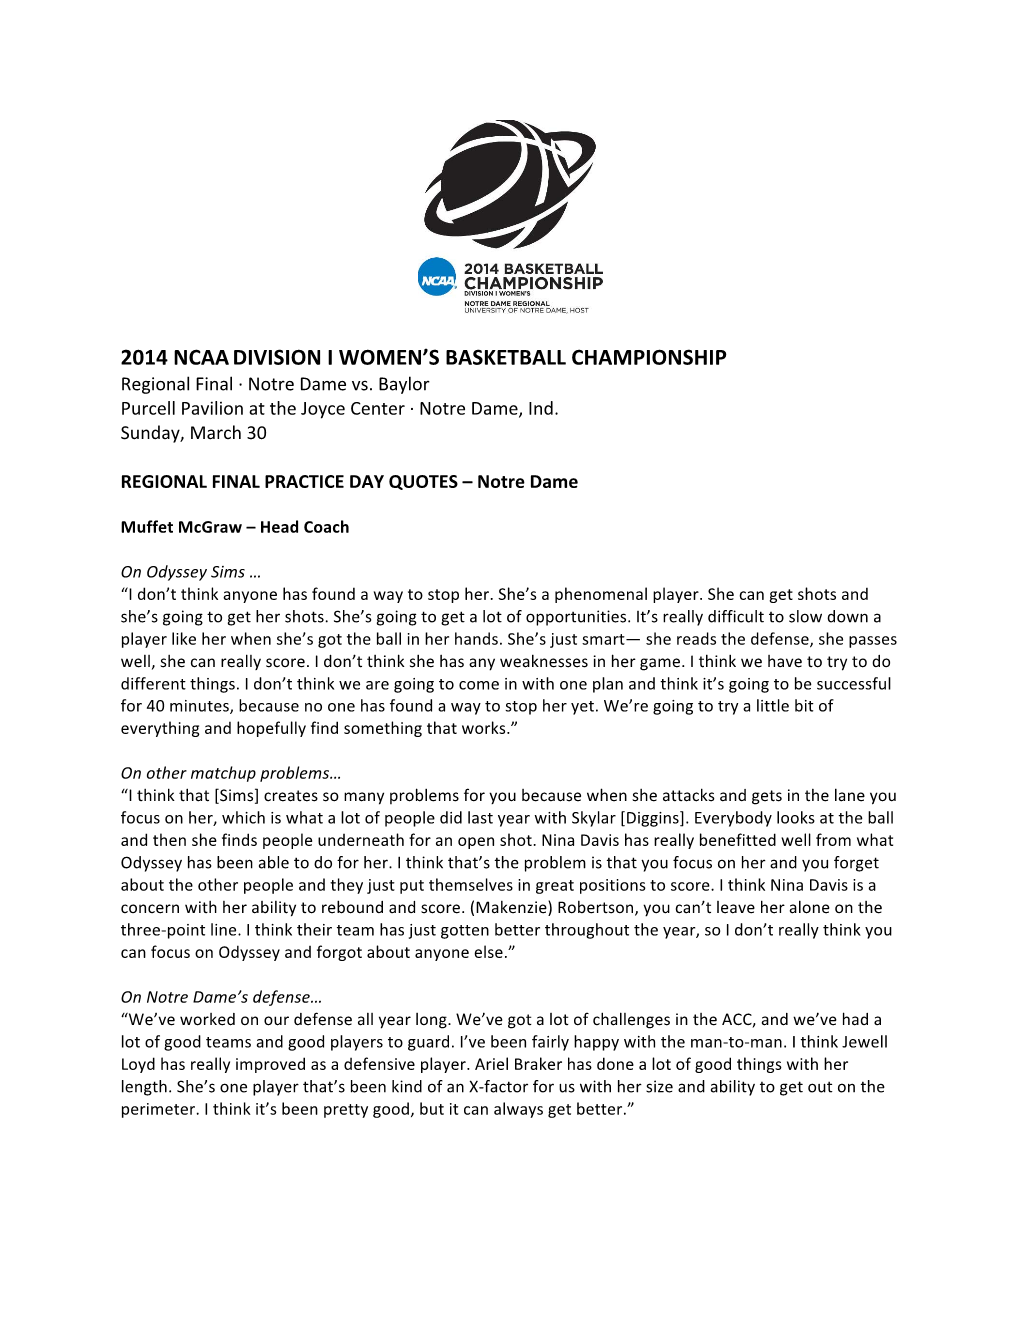 2014 Ncaa Division I Women's Basketball Championship